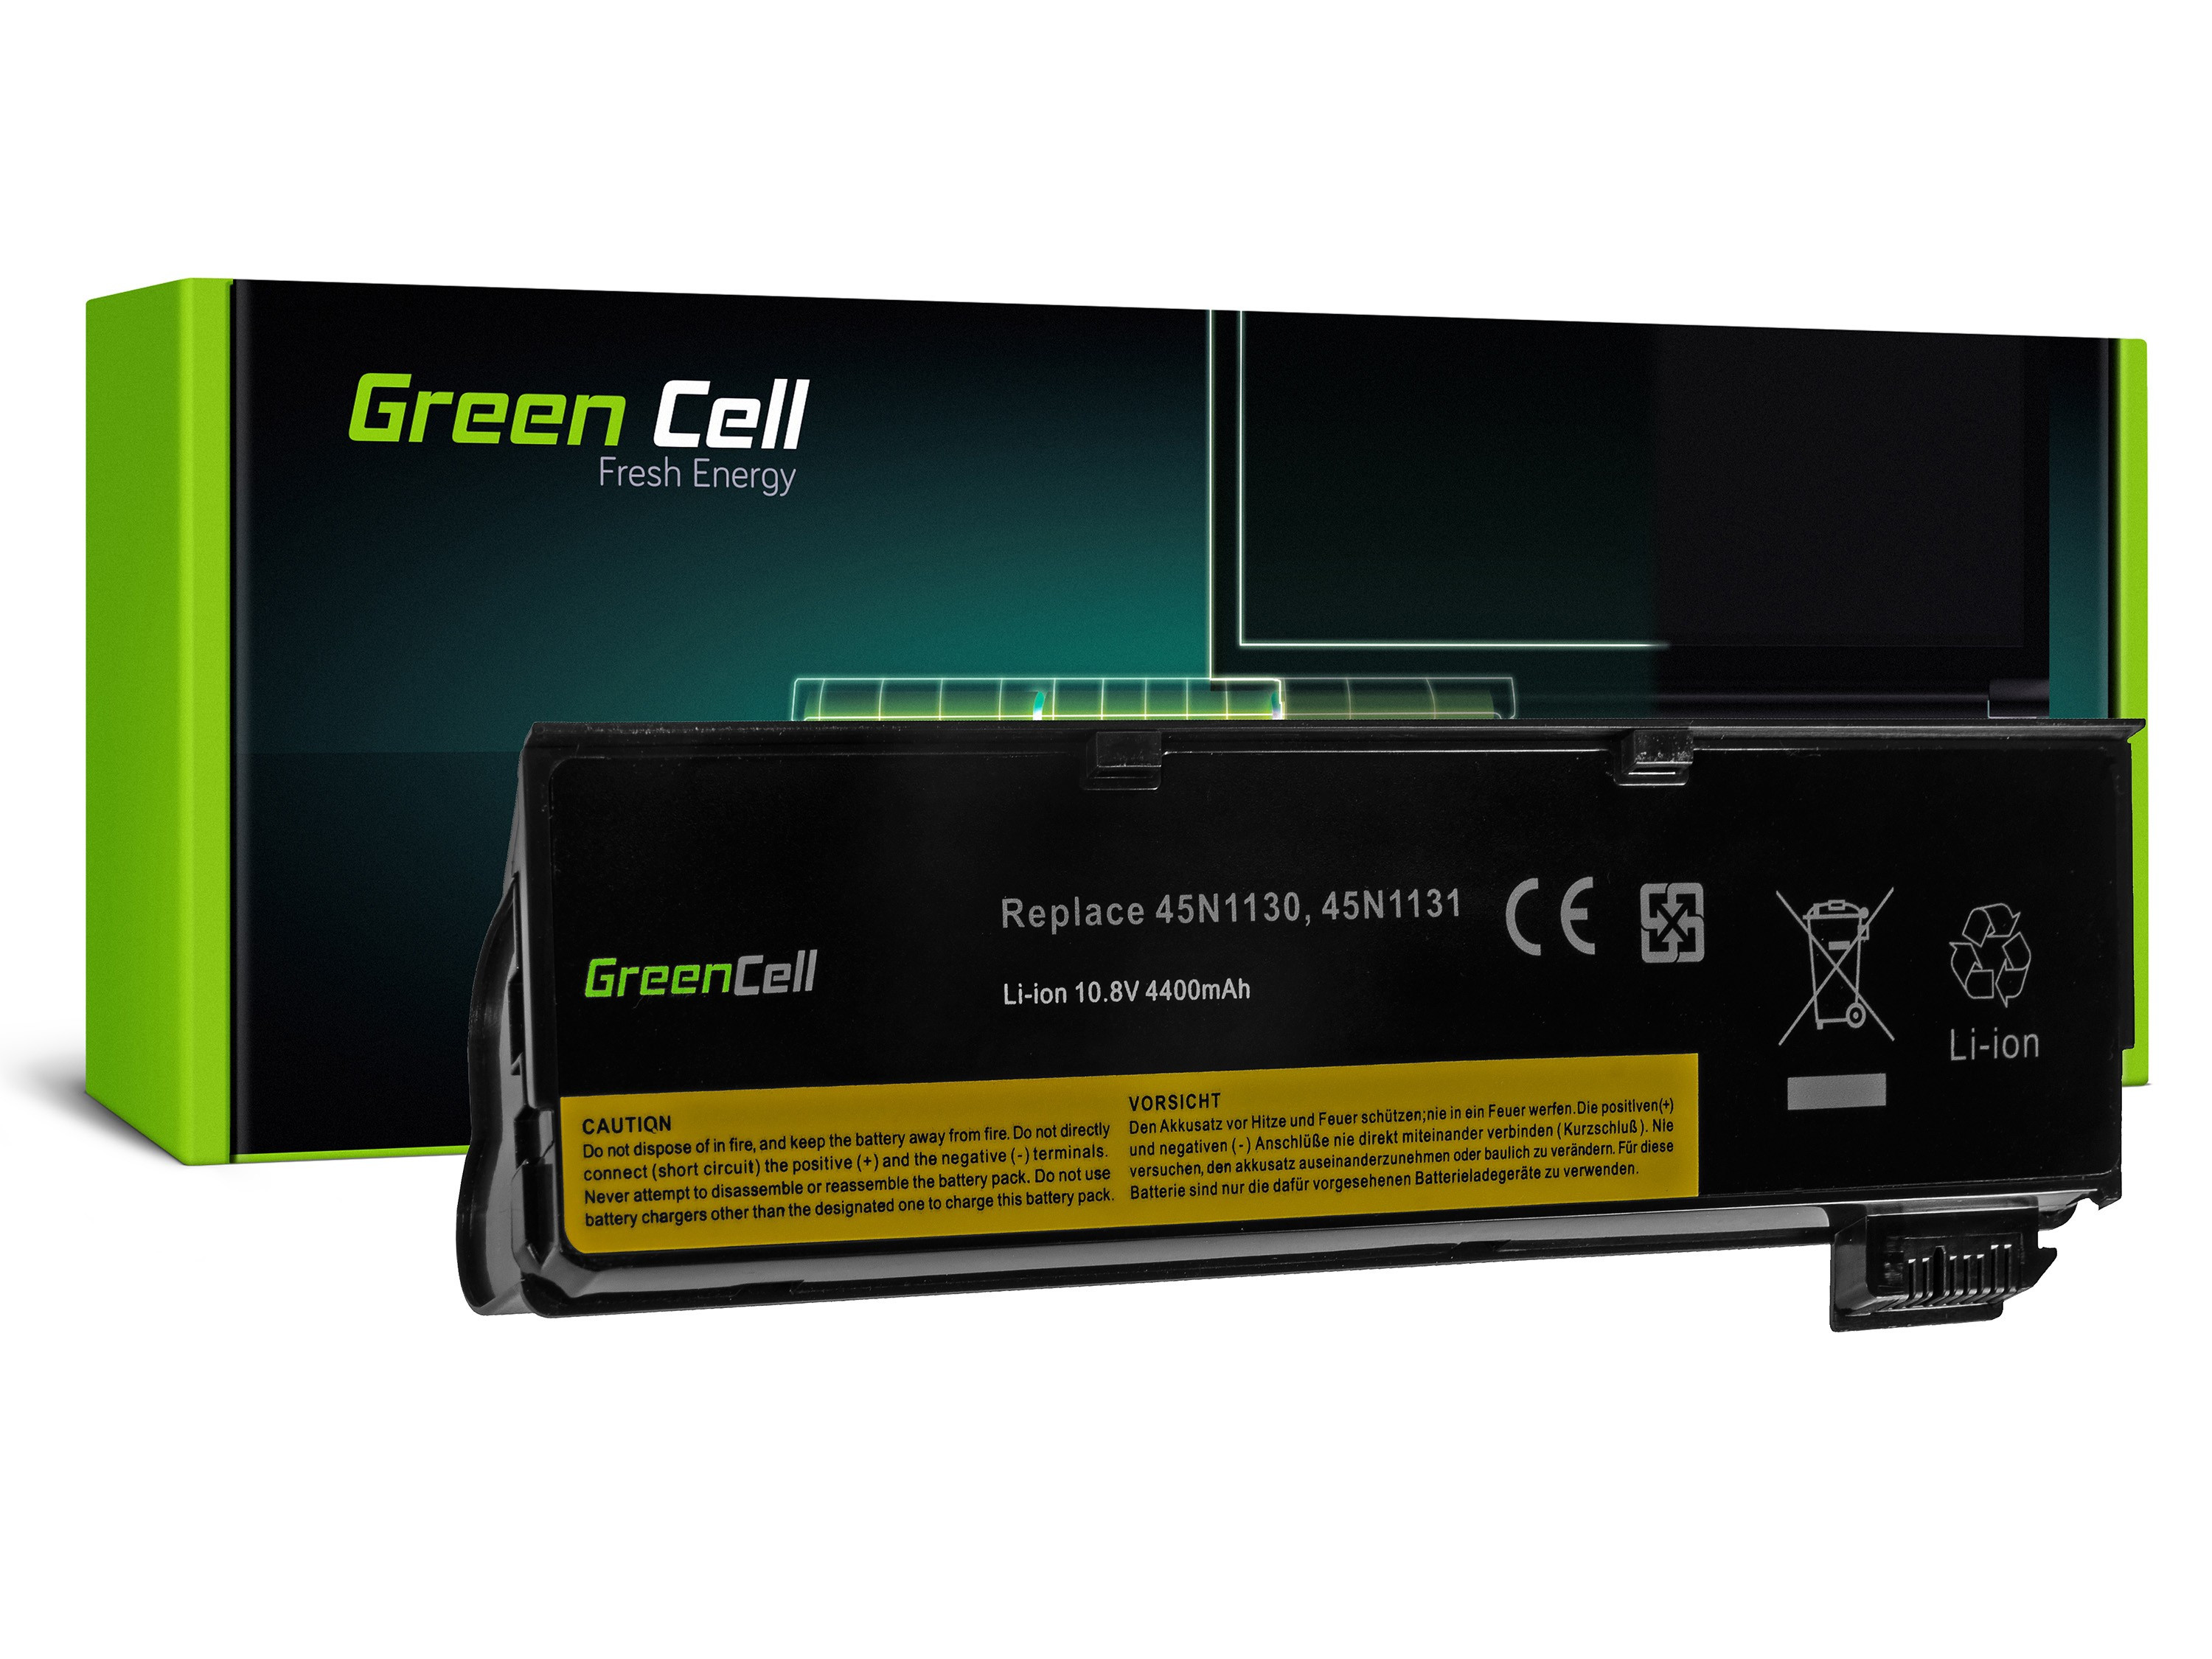 *Green Cell LE57V2 Baterie Lenovo ThinkPad T440 T440s T450 T450s T460 T460p T470p T550 T560 W550s X240 X250 X260 X270 L450 L460 L470 4400mAh Li-ion